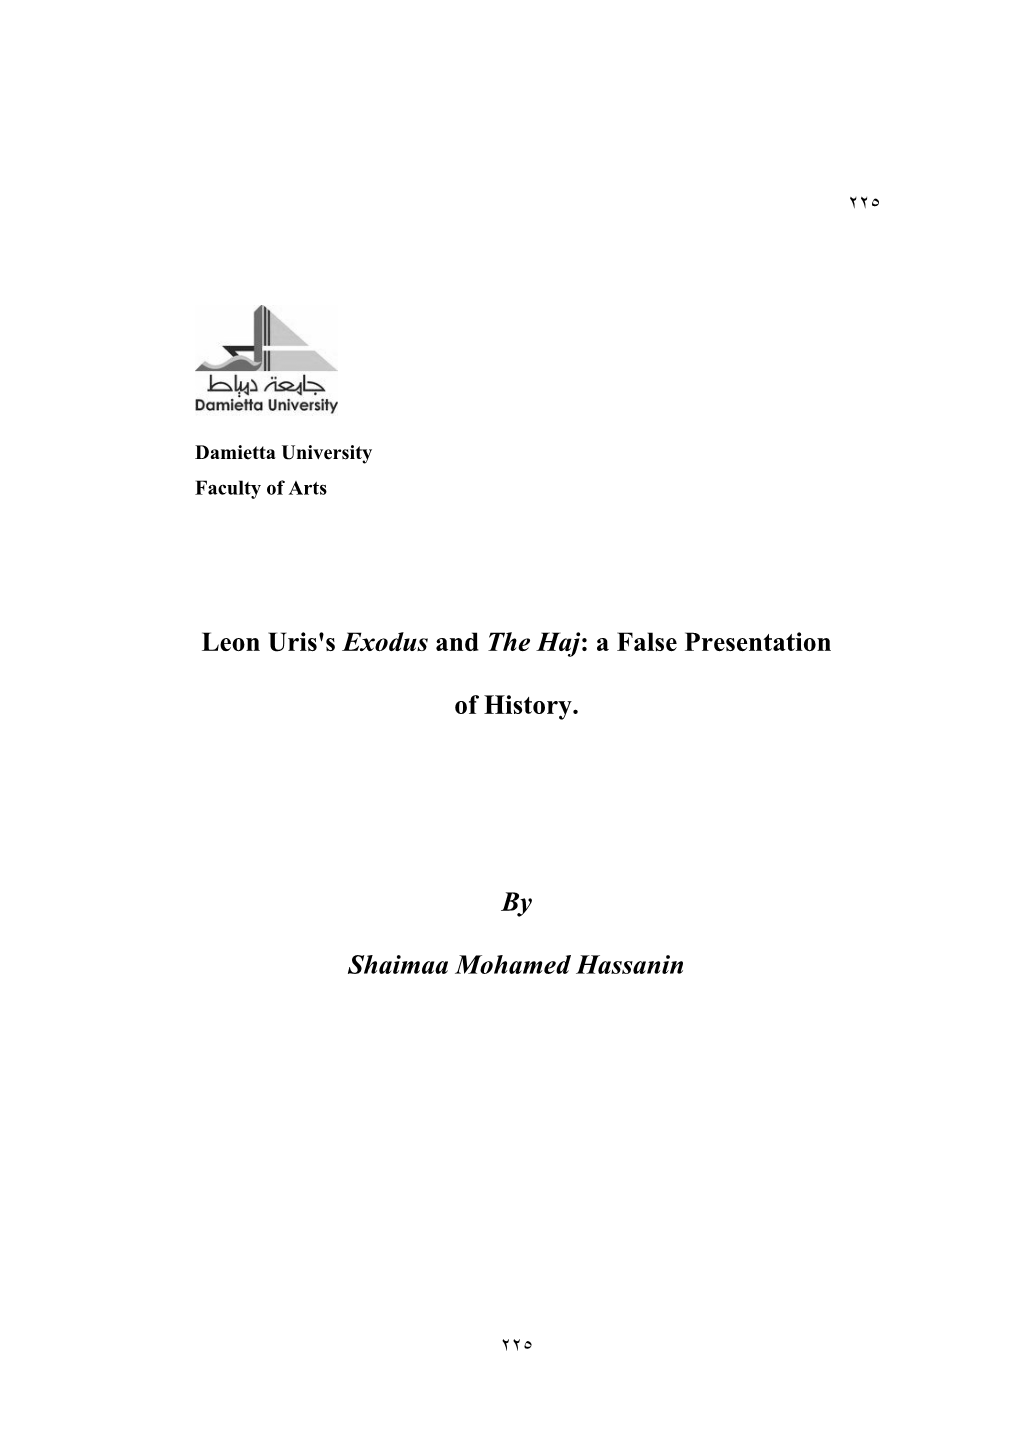 Leon Uris's Exodus and the Haj: a False Presentation